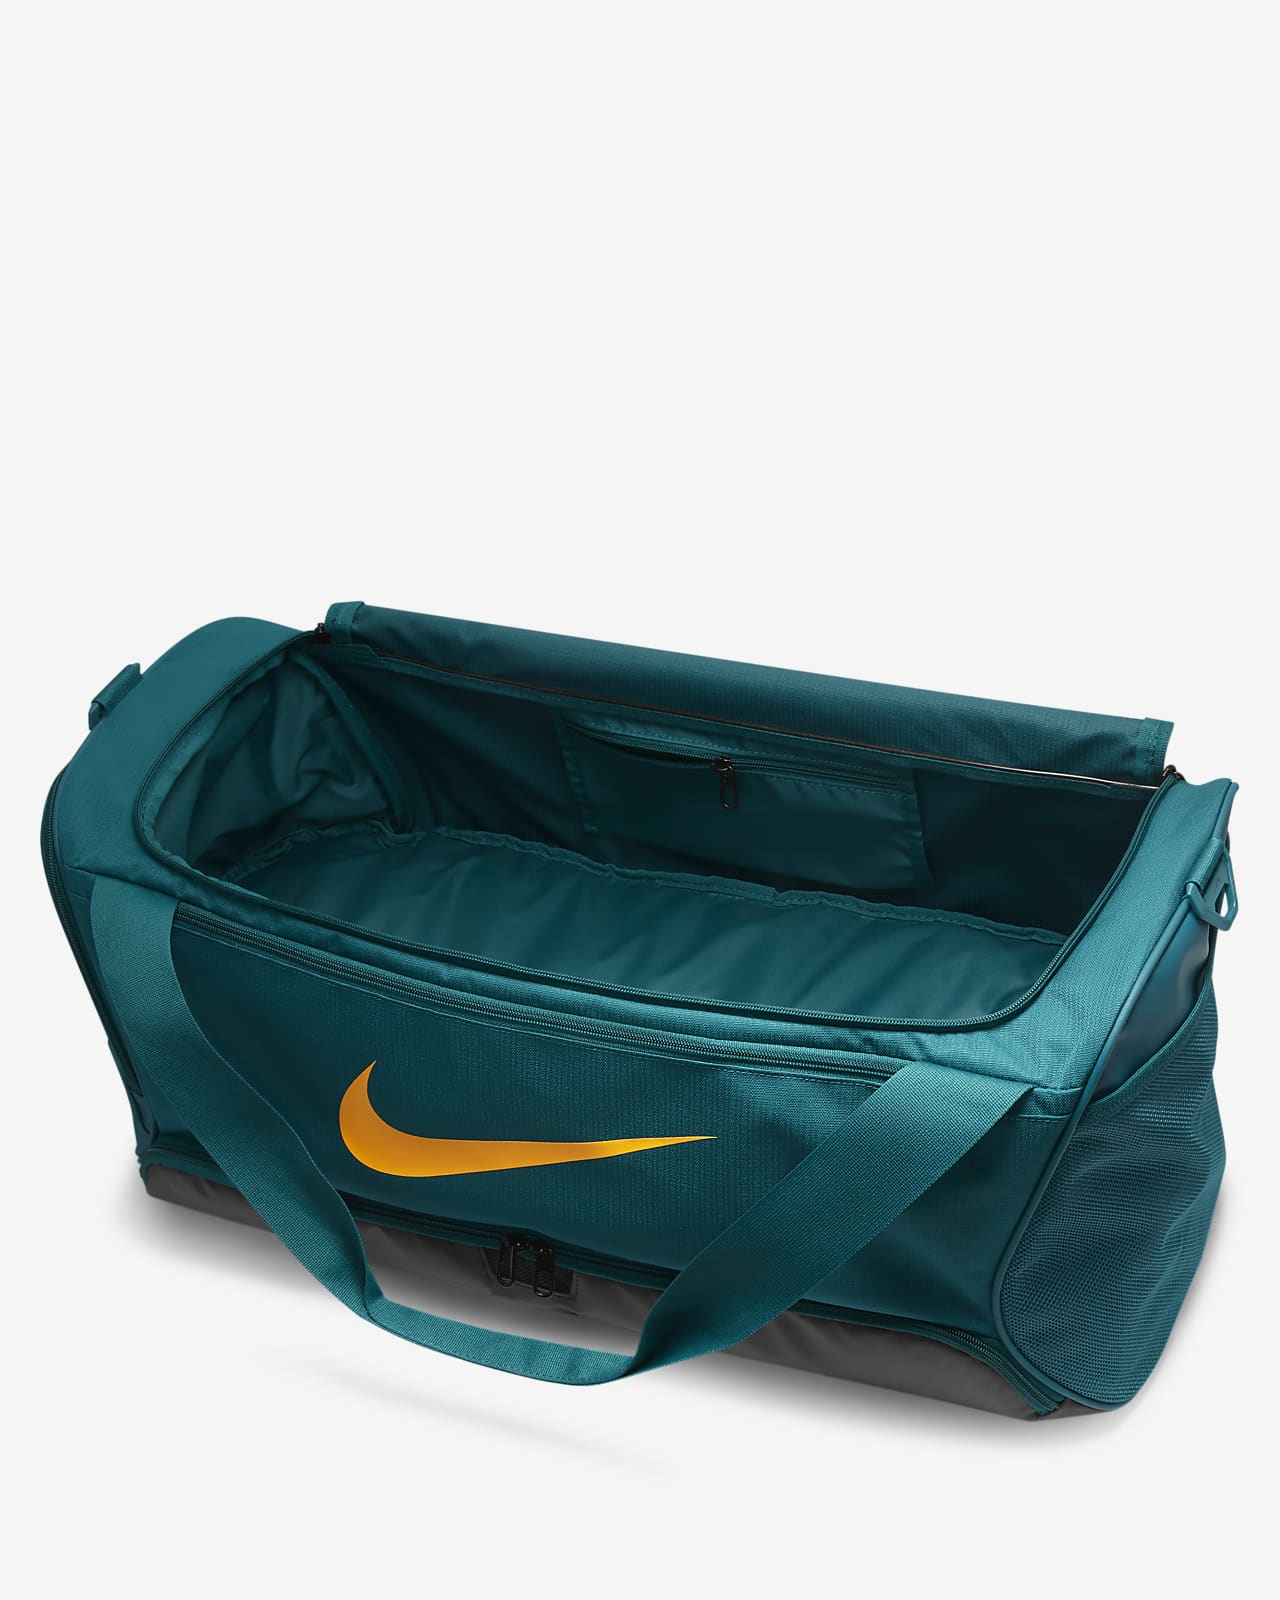 Nike Club Team Swoosh Roller Bag 3.0 Sport Duffel, 82 cm, 120 liters, Black  (White) : Amazon.co.uk: Sports & Outdoors